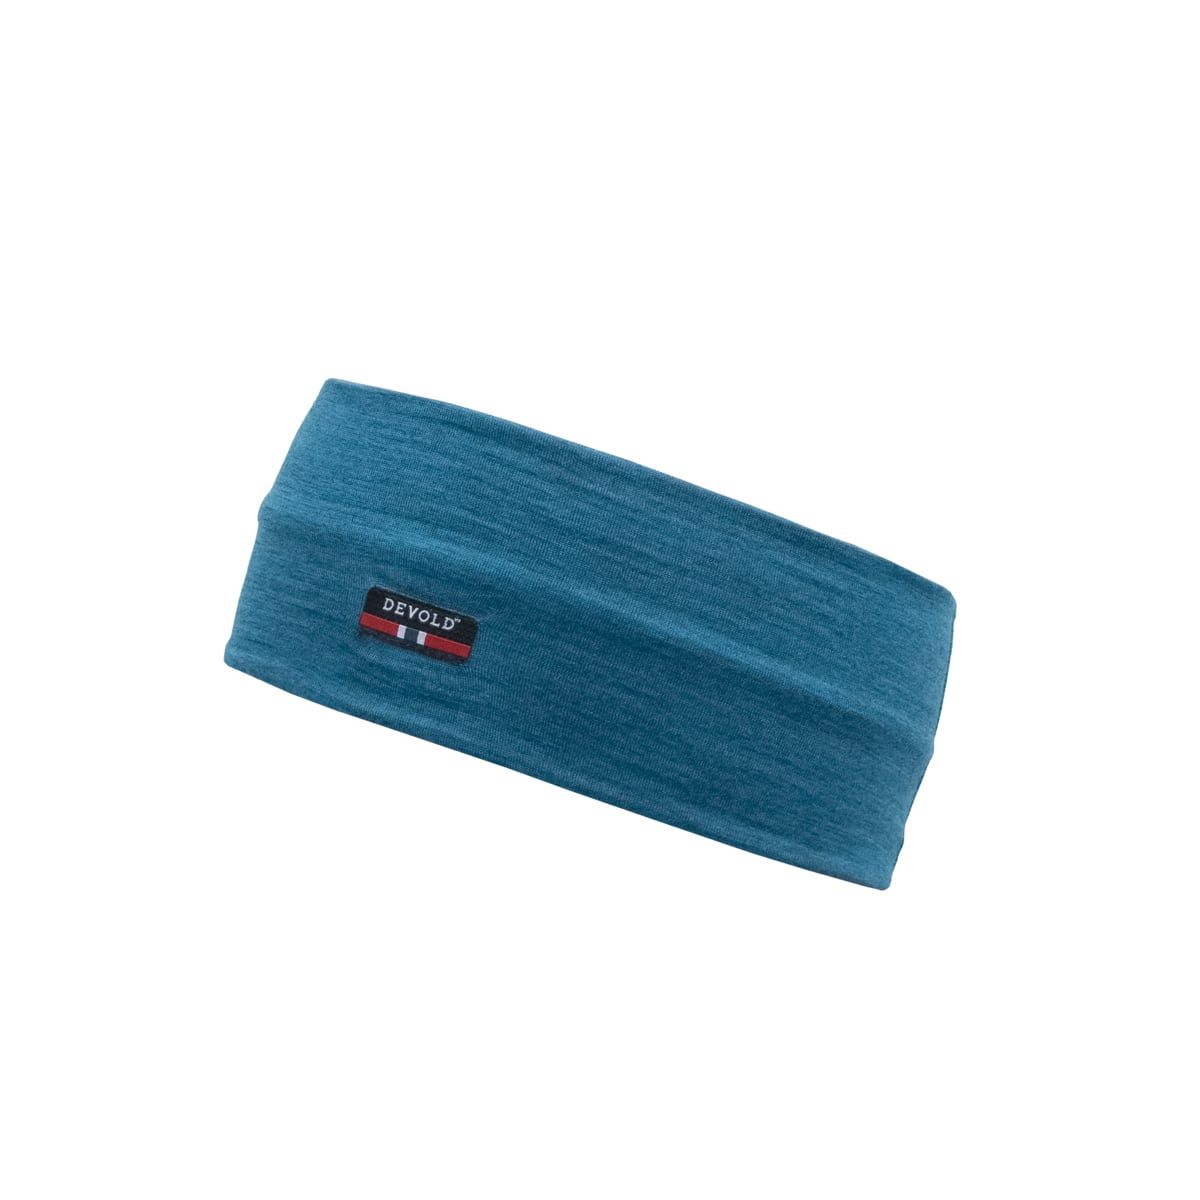 Devold Breeze Merino 150 Headband Blue Melange